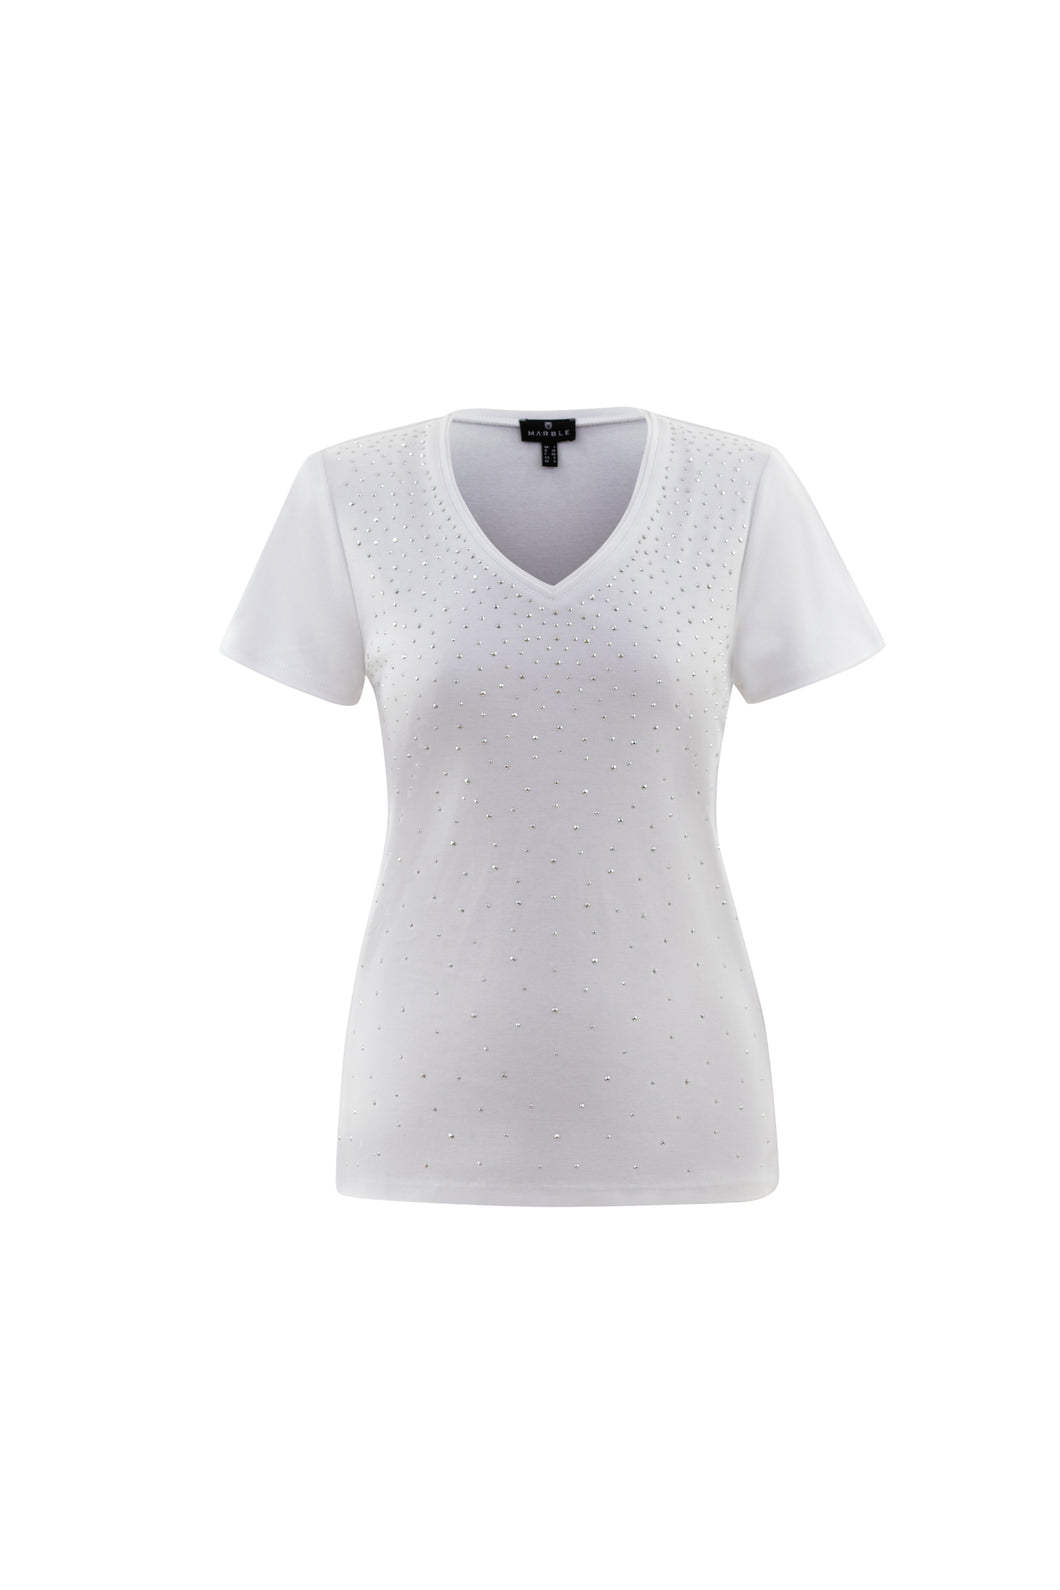 Marble White Short Sleeve V-Neck Super Soft Cotton Rib Top with Embellishment